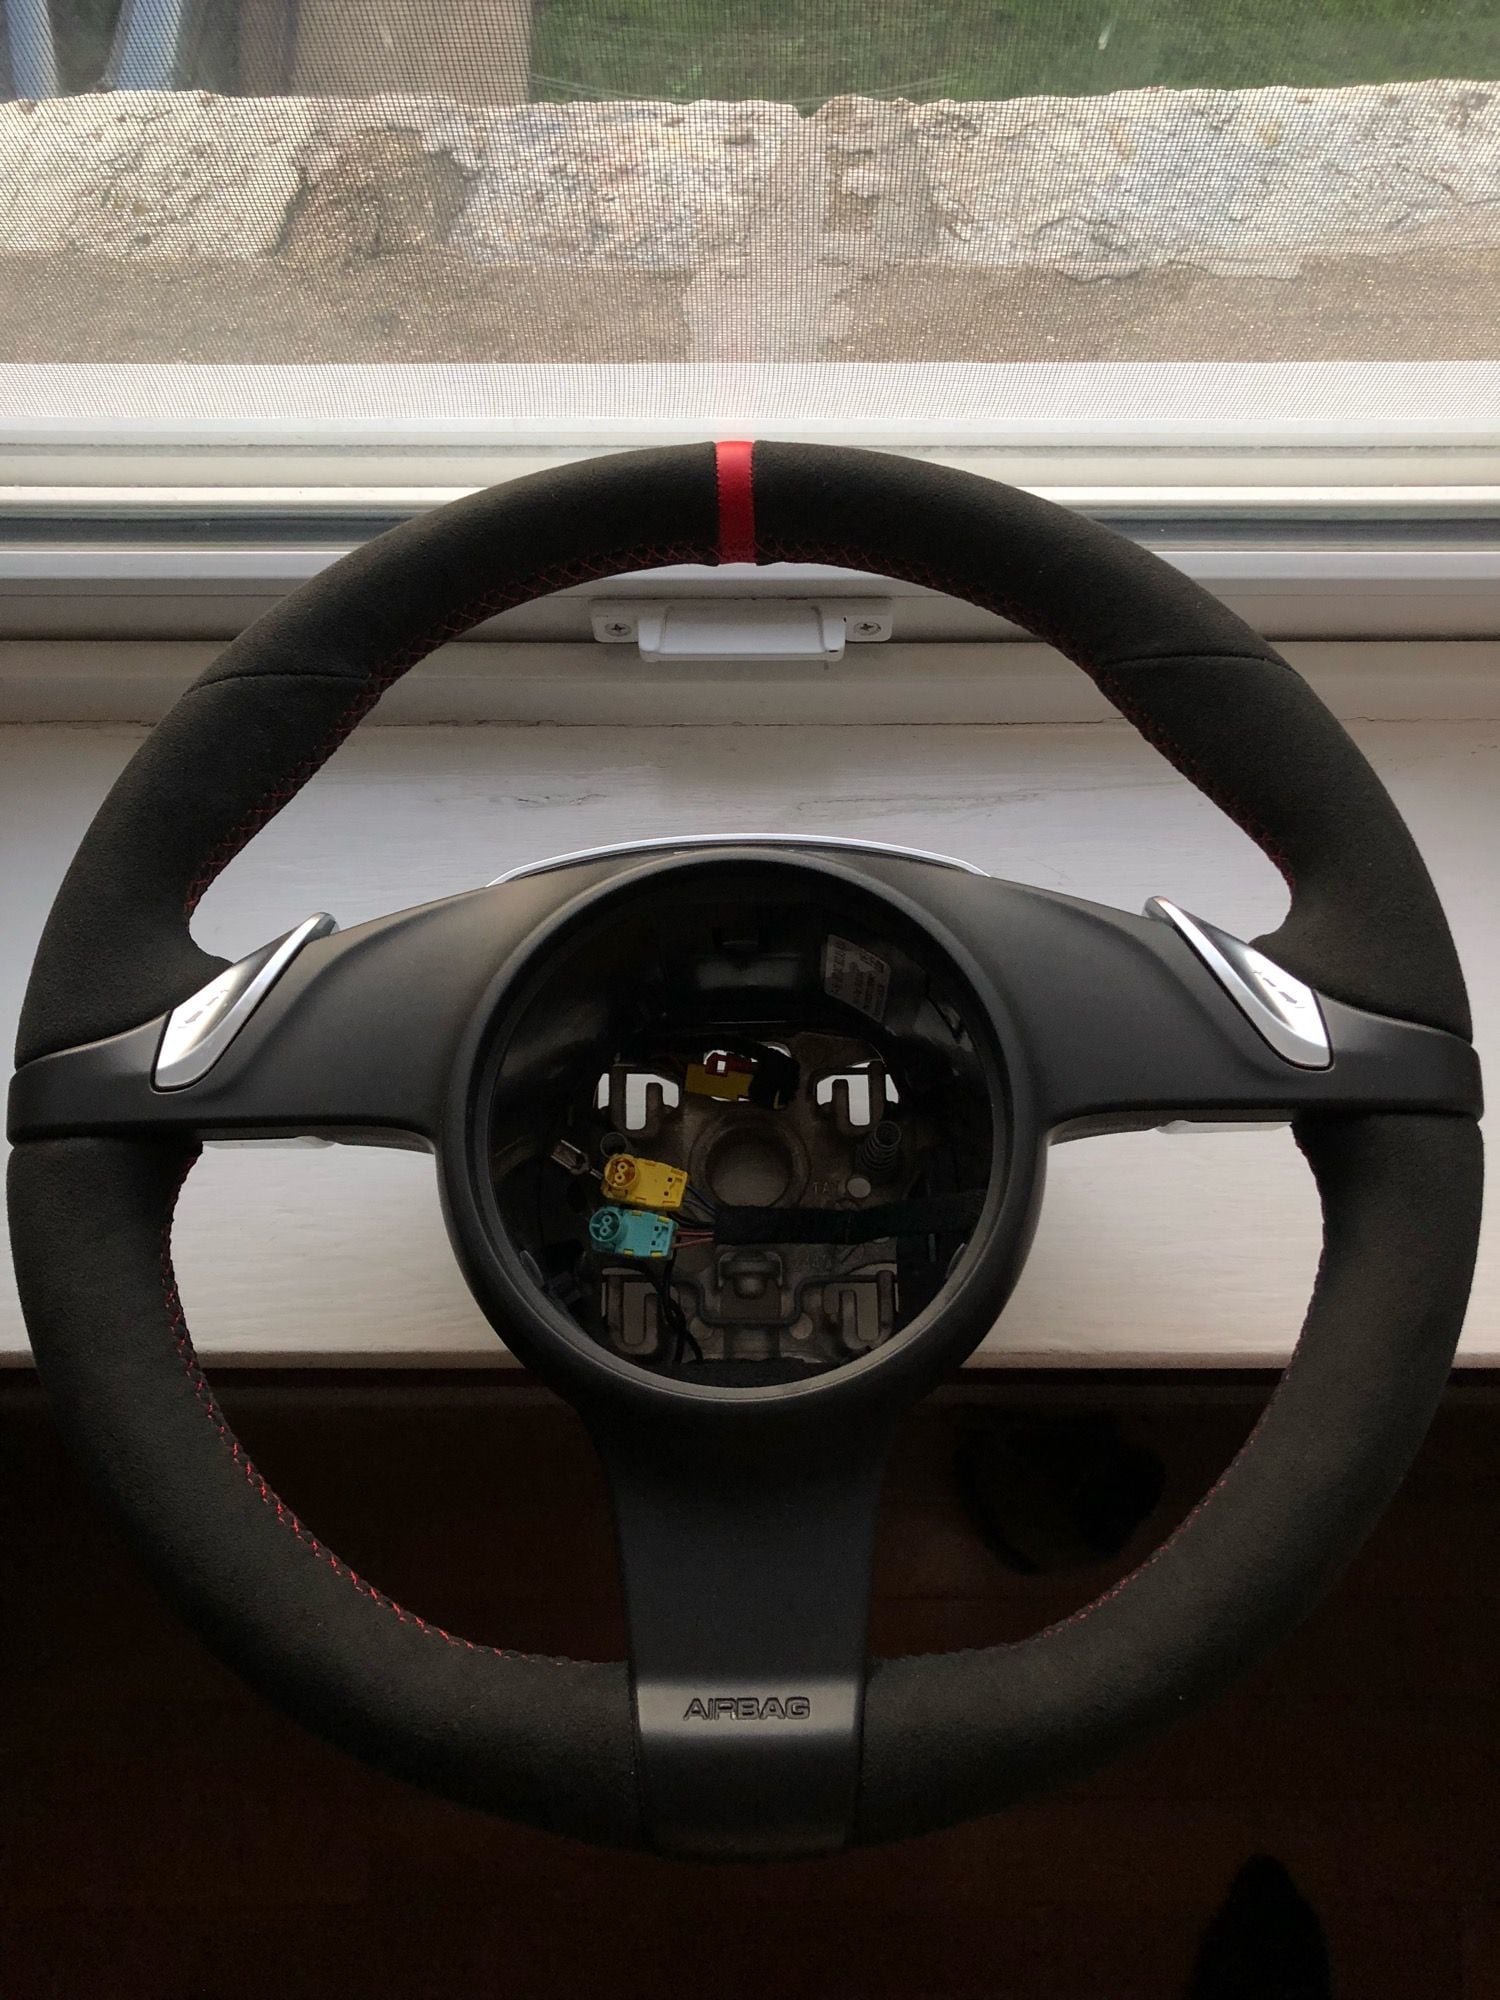 Interior/Upholstery - Porsche 991 Steering wheel. Alcantara. PDK. Heated. - Used - 2012 to 2015 Porsche 911 - Philadelphia, PA 19115, United States